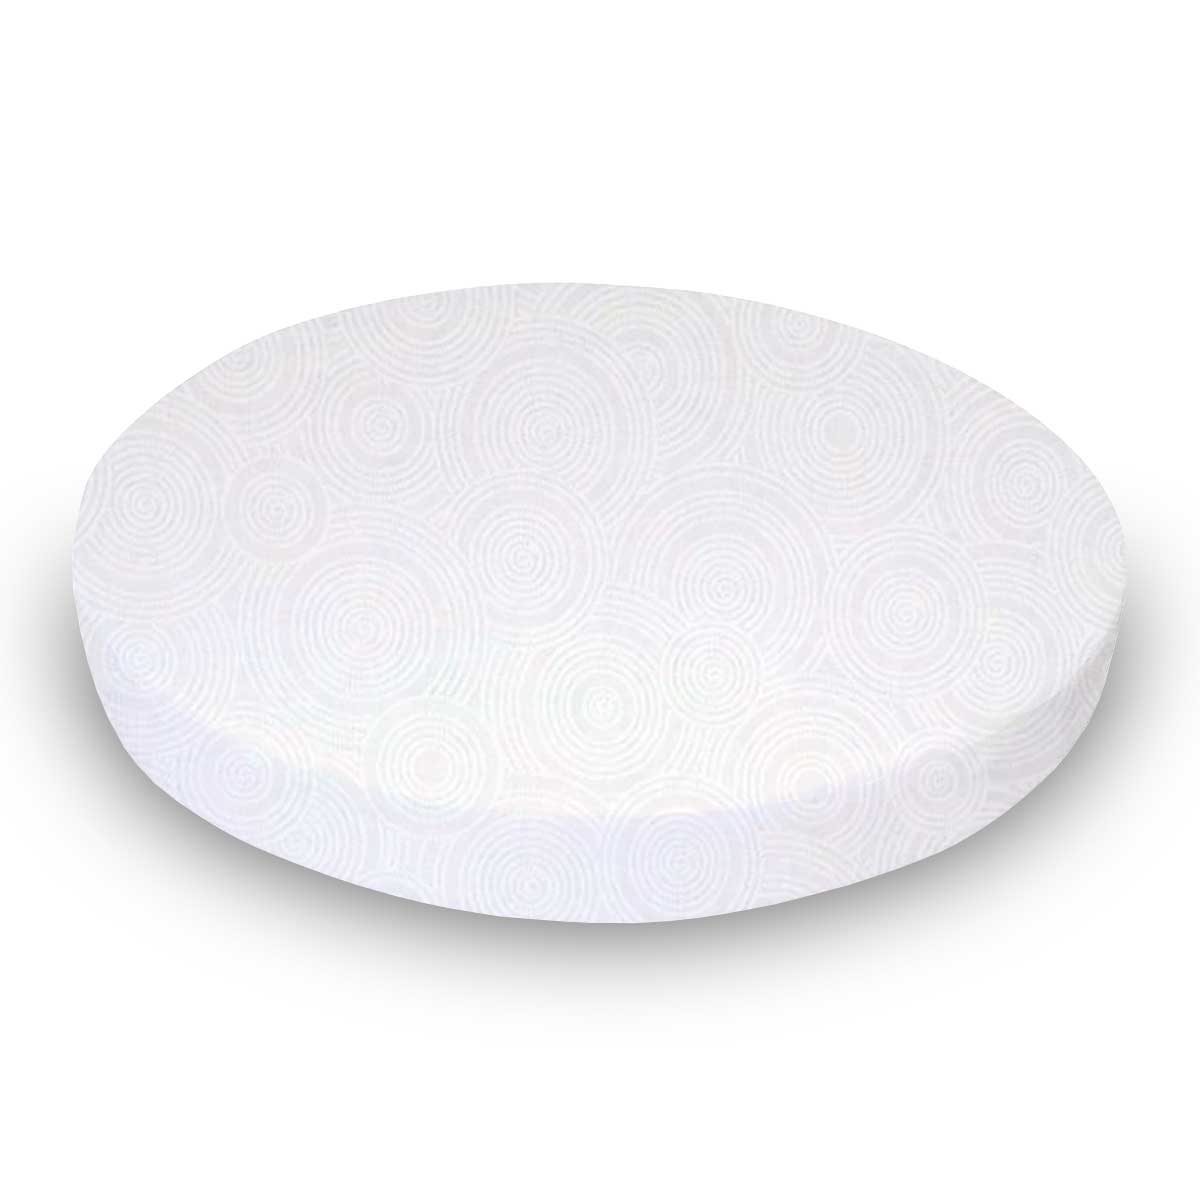 Oval Crib (Stokke Sleepi) - White On White Multi Circles - Fitted  Oval